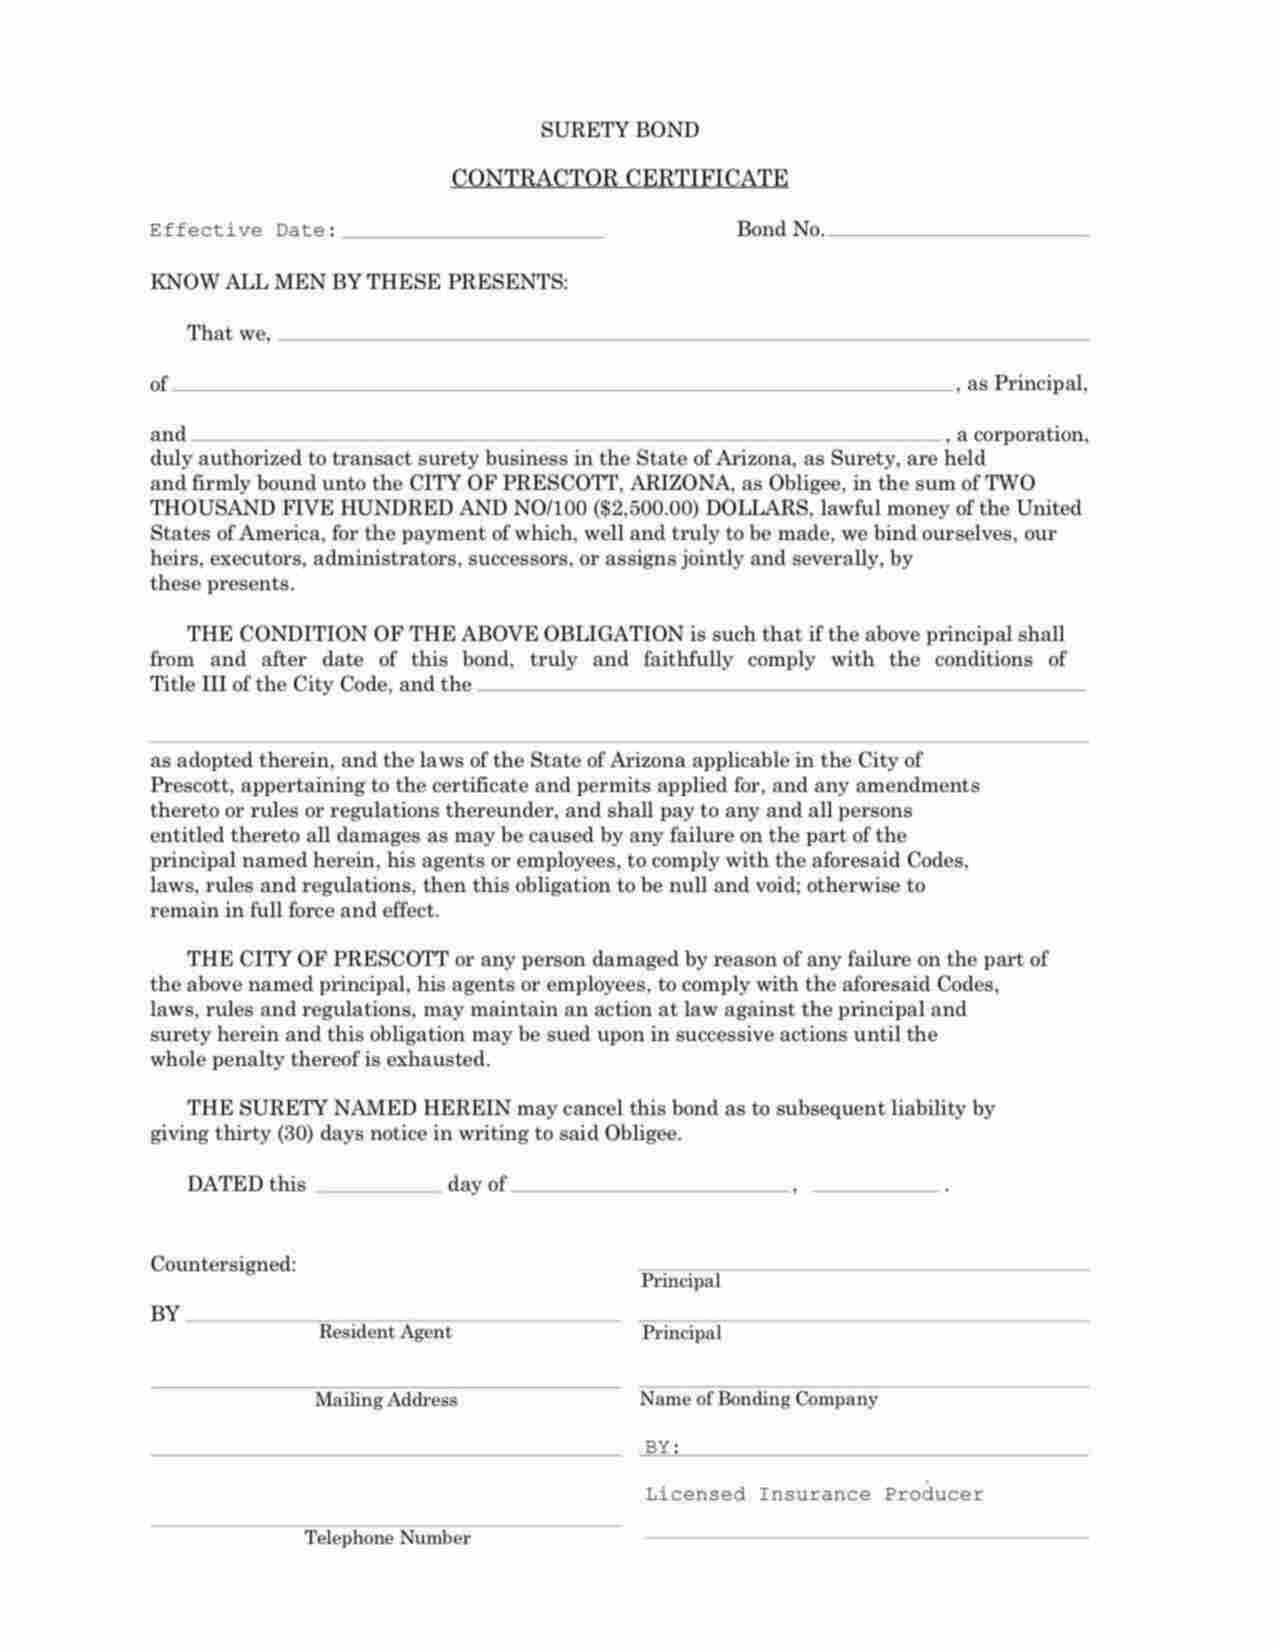 Arizona Contractor Certificate Bond Form